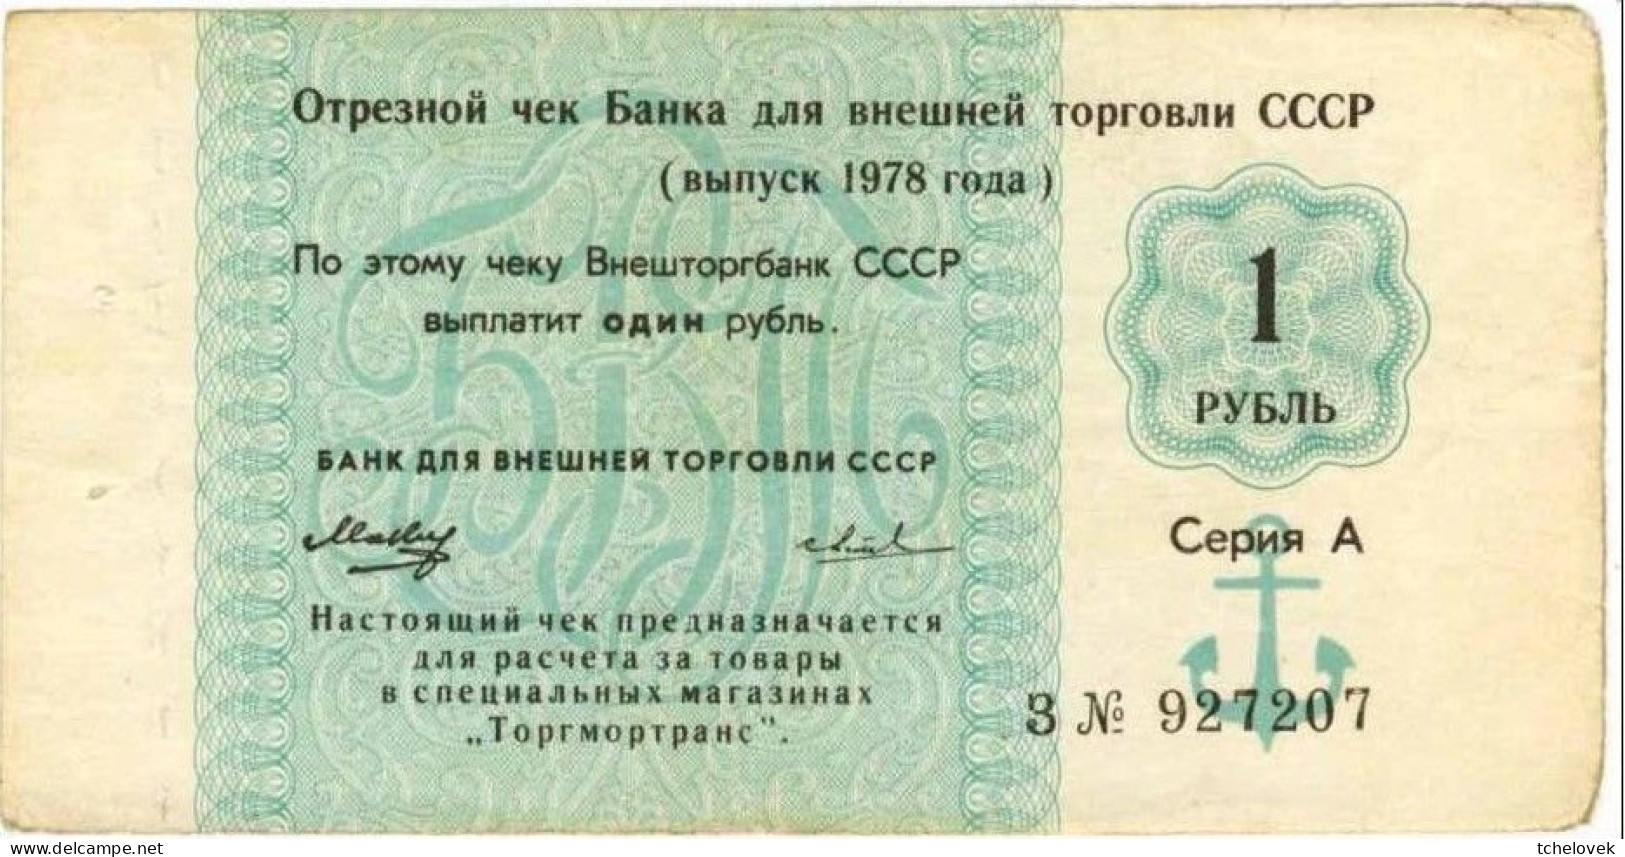 (Billets).Russie Russia USSR Vneshposiltorg Vneshtorgbank 1 R 1978 Ancre Serie Z N° 927207. Foreign Exchange Certificate - Russie